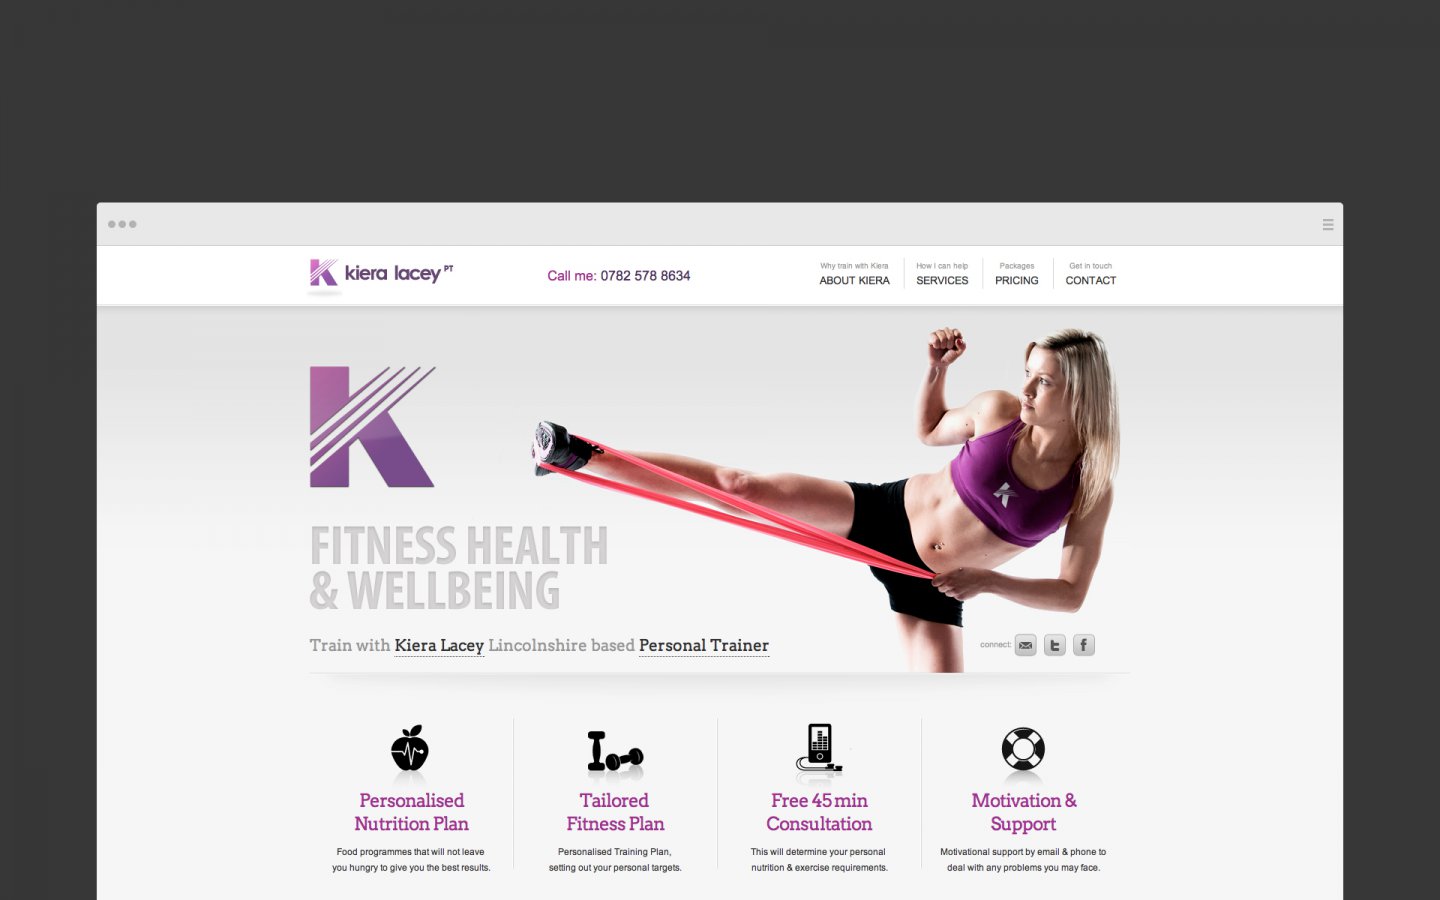 Kiera Lacey Logo Design on The Website